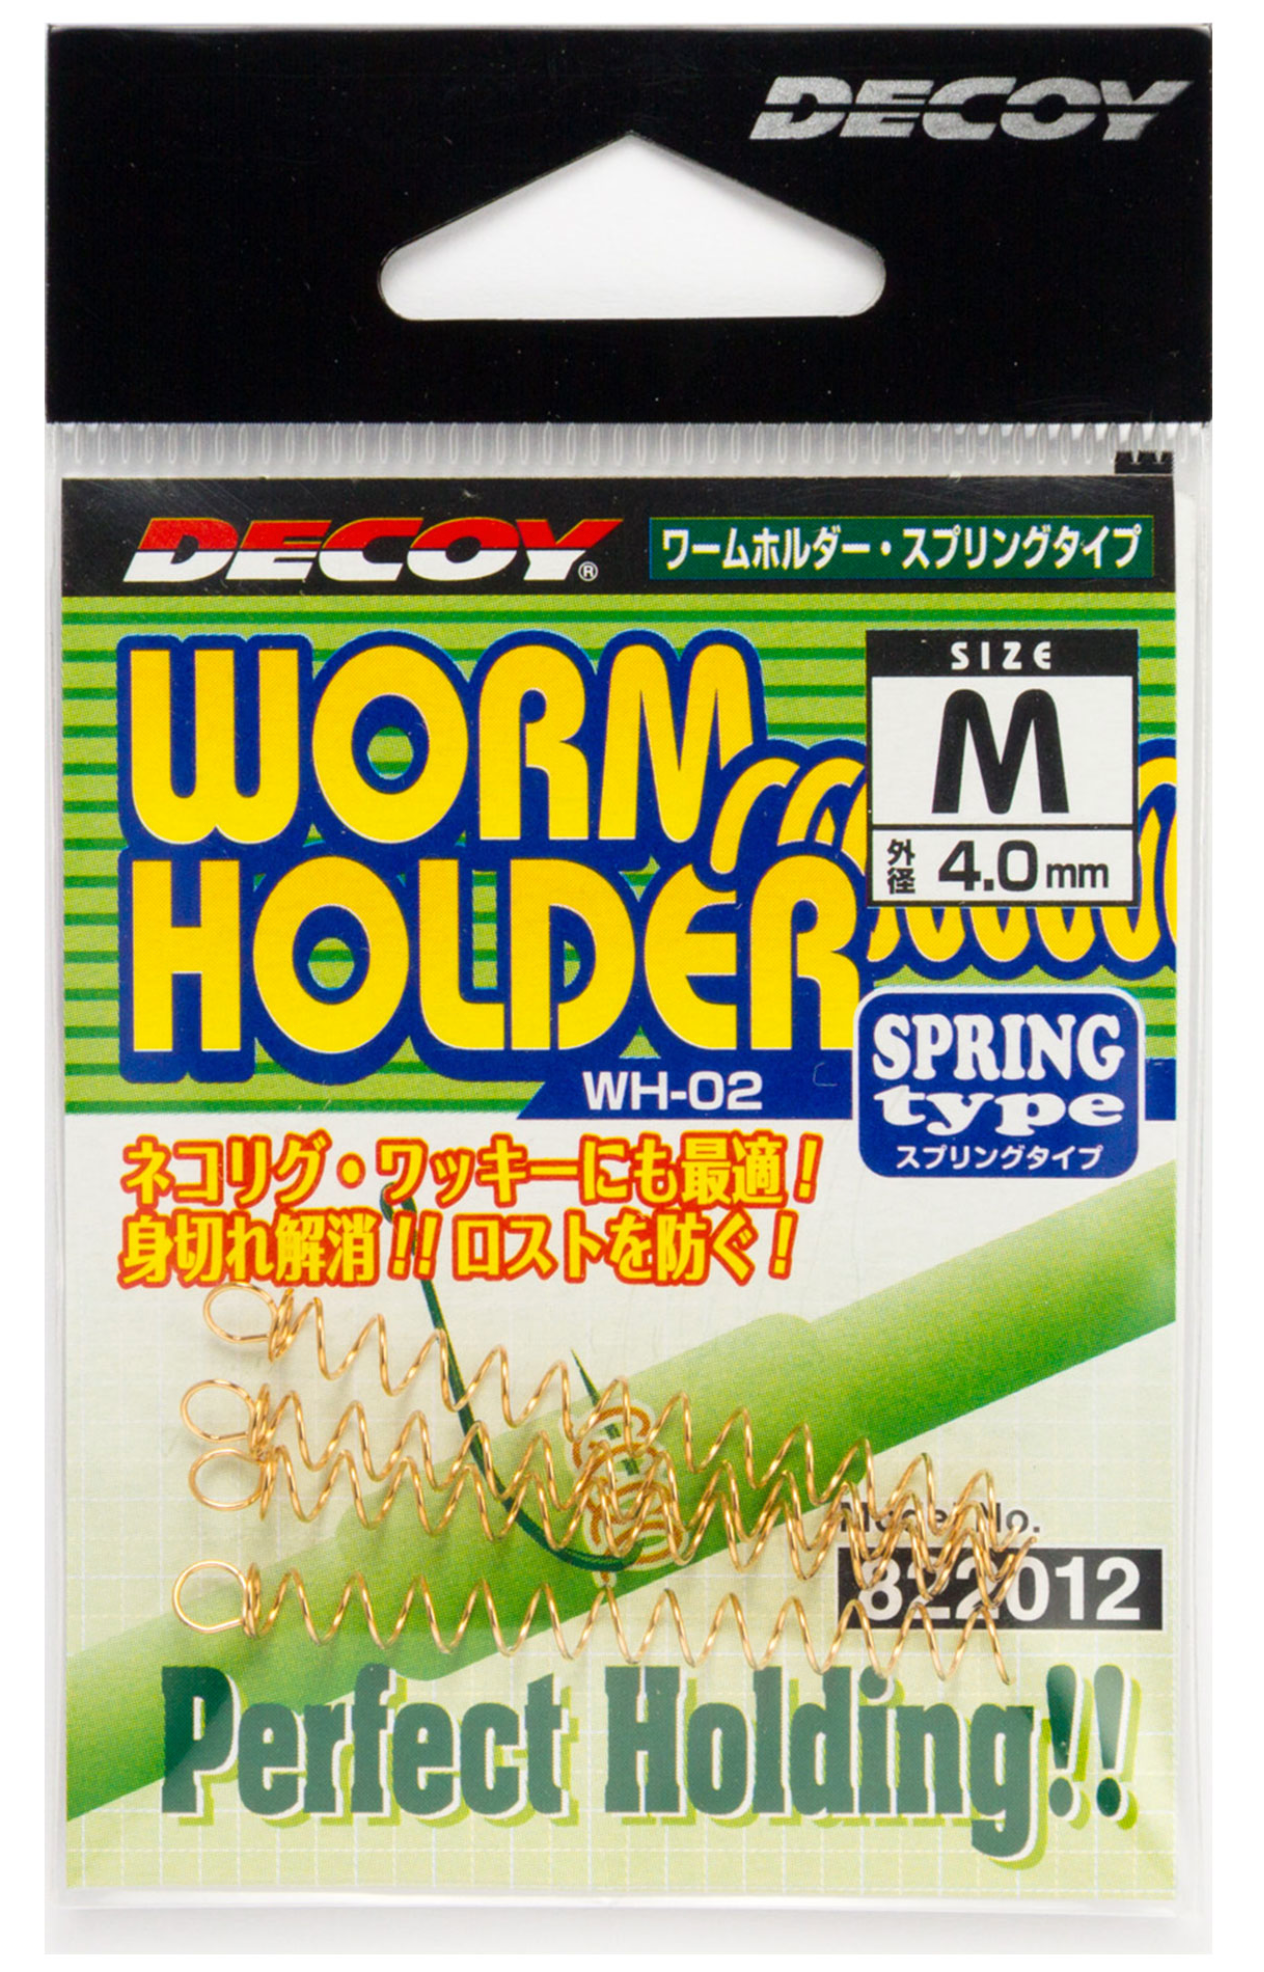 Decoy WH-02 Worm Holder Spring Large